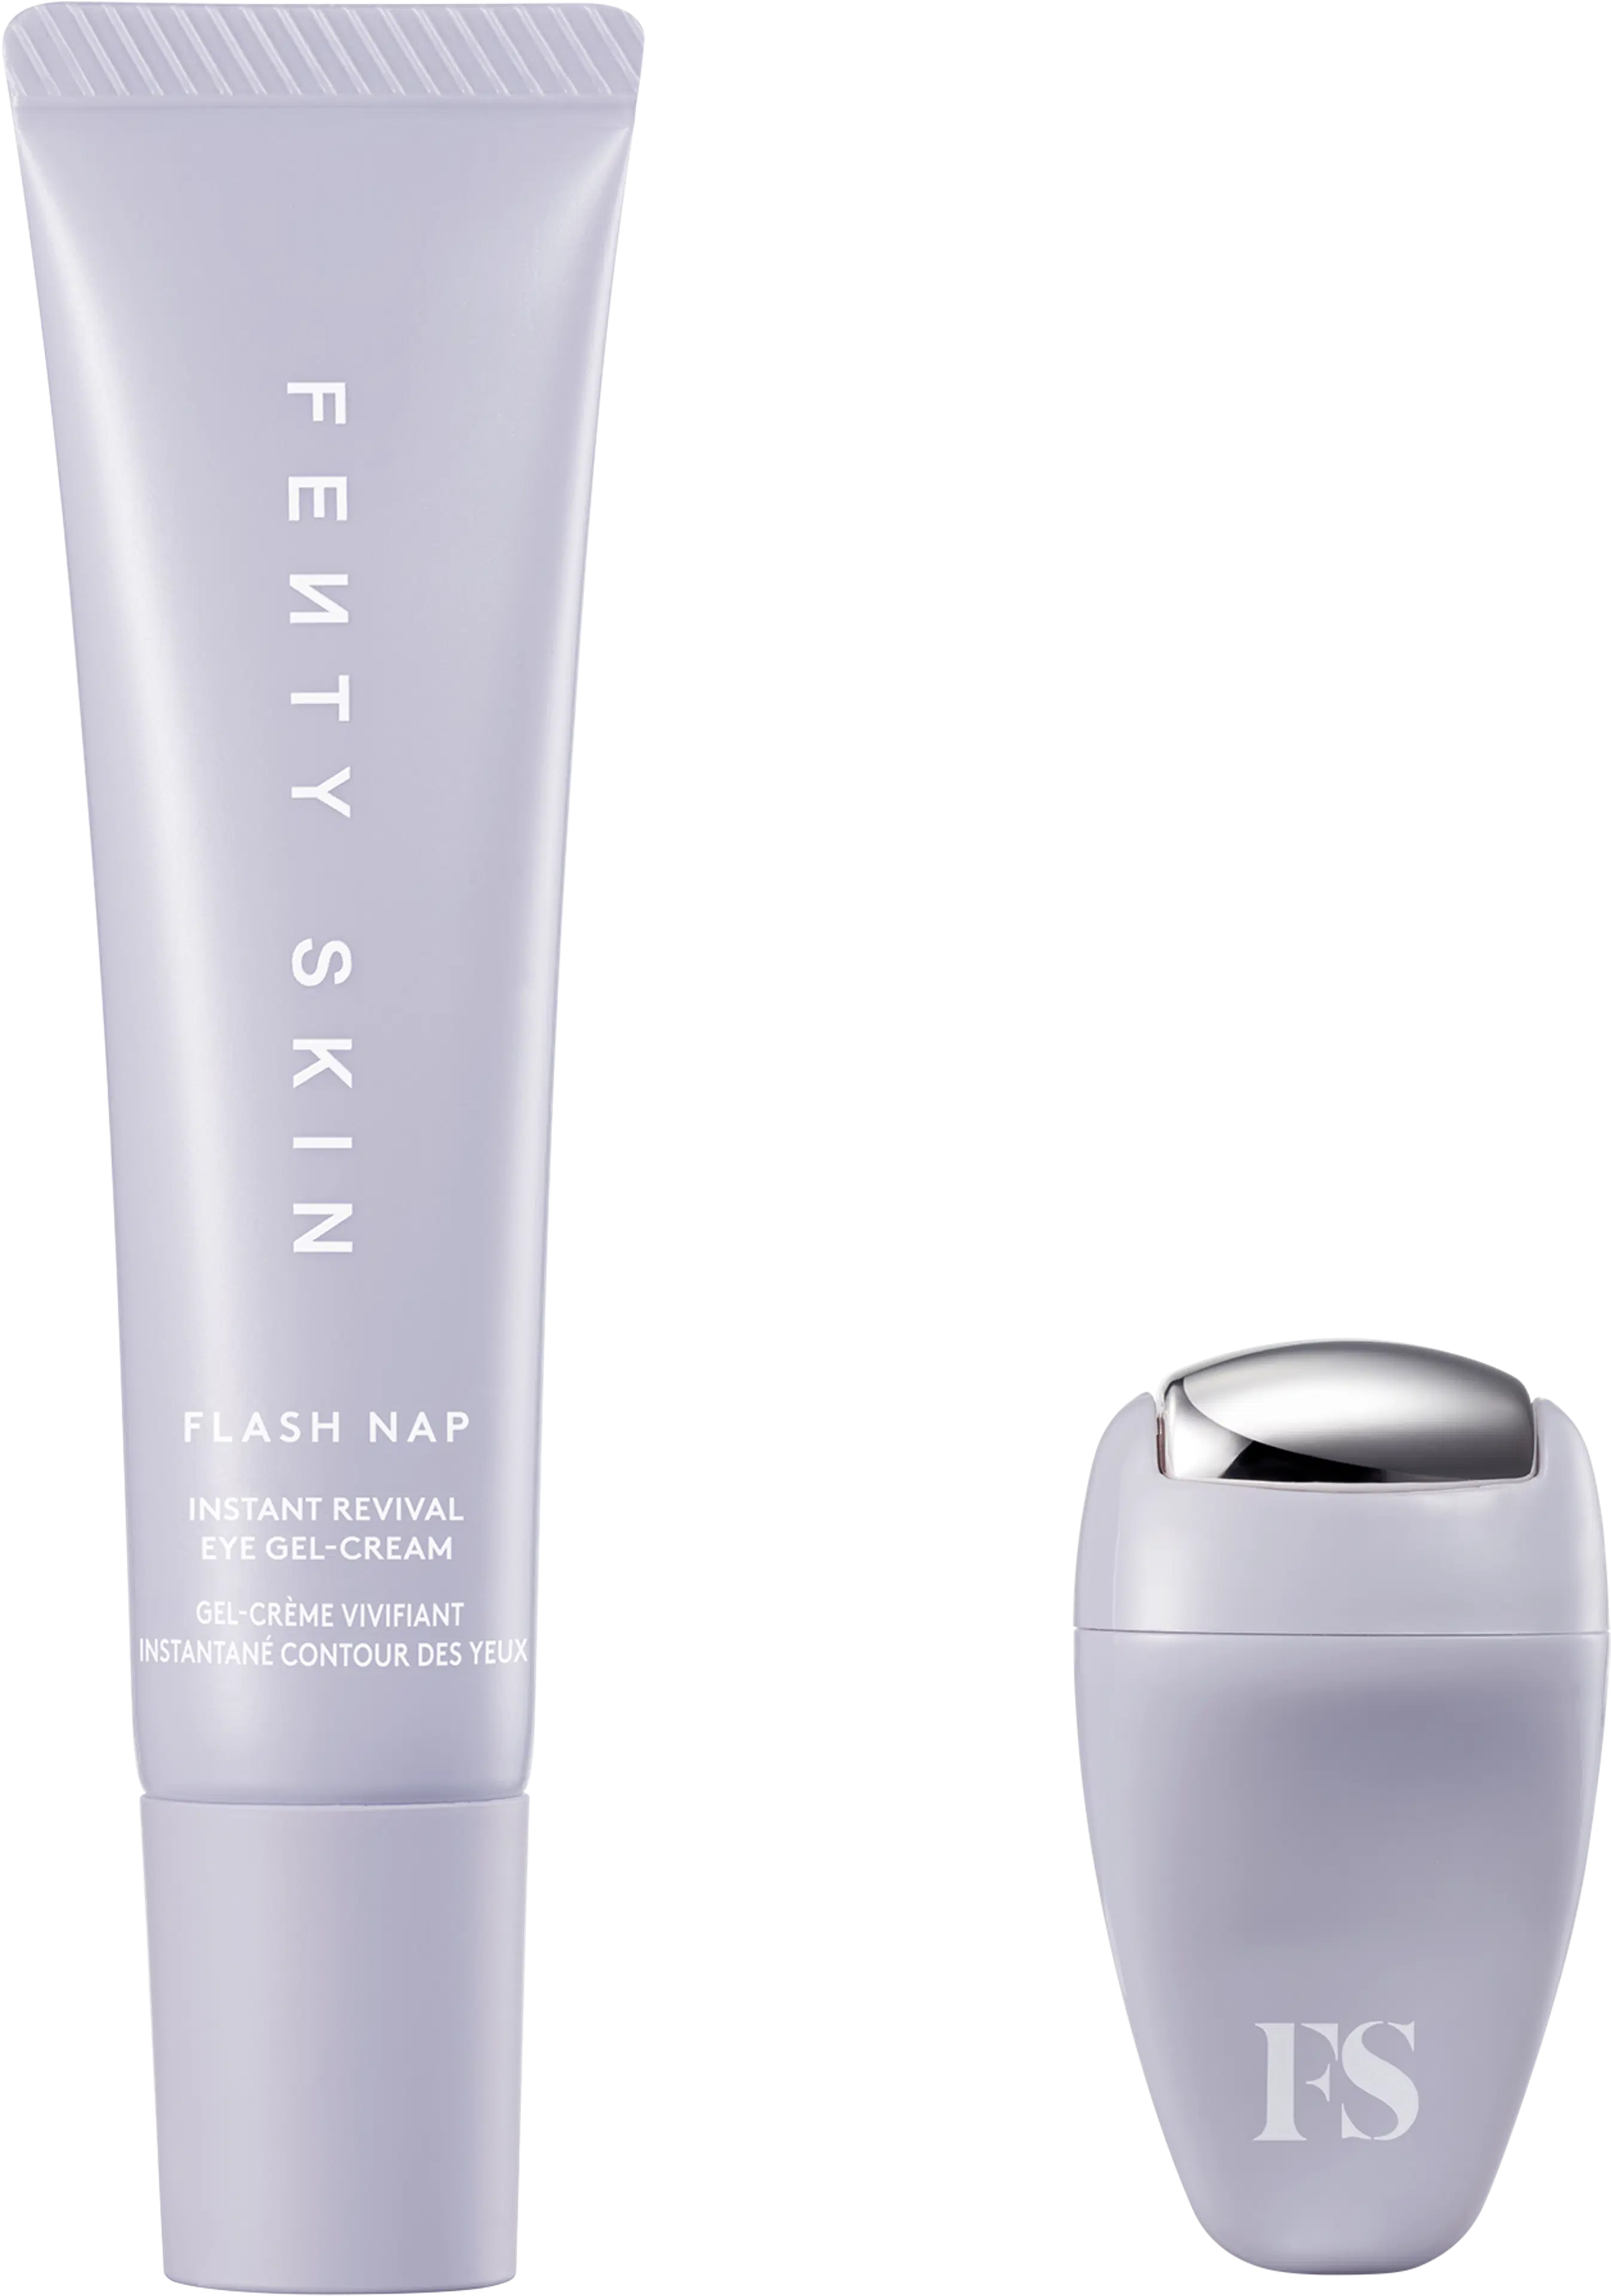 Fenty Skin Flash Nap Eye Gel-Cream W/ Applicator silmänympärysvoide & hierontarulla 15 ml